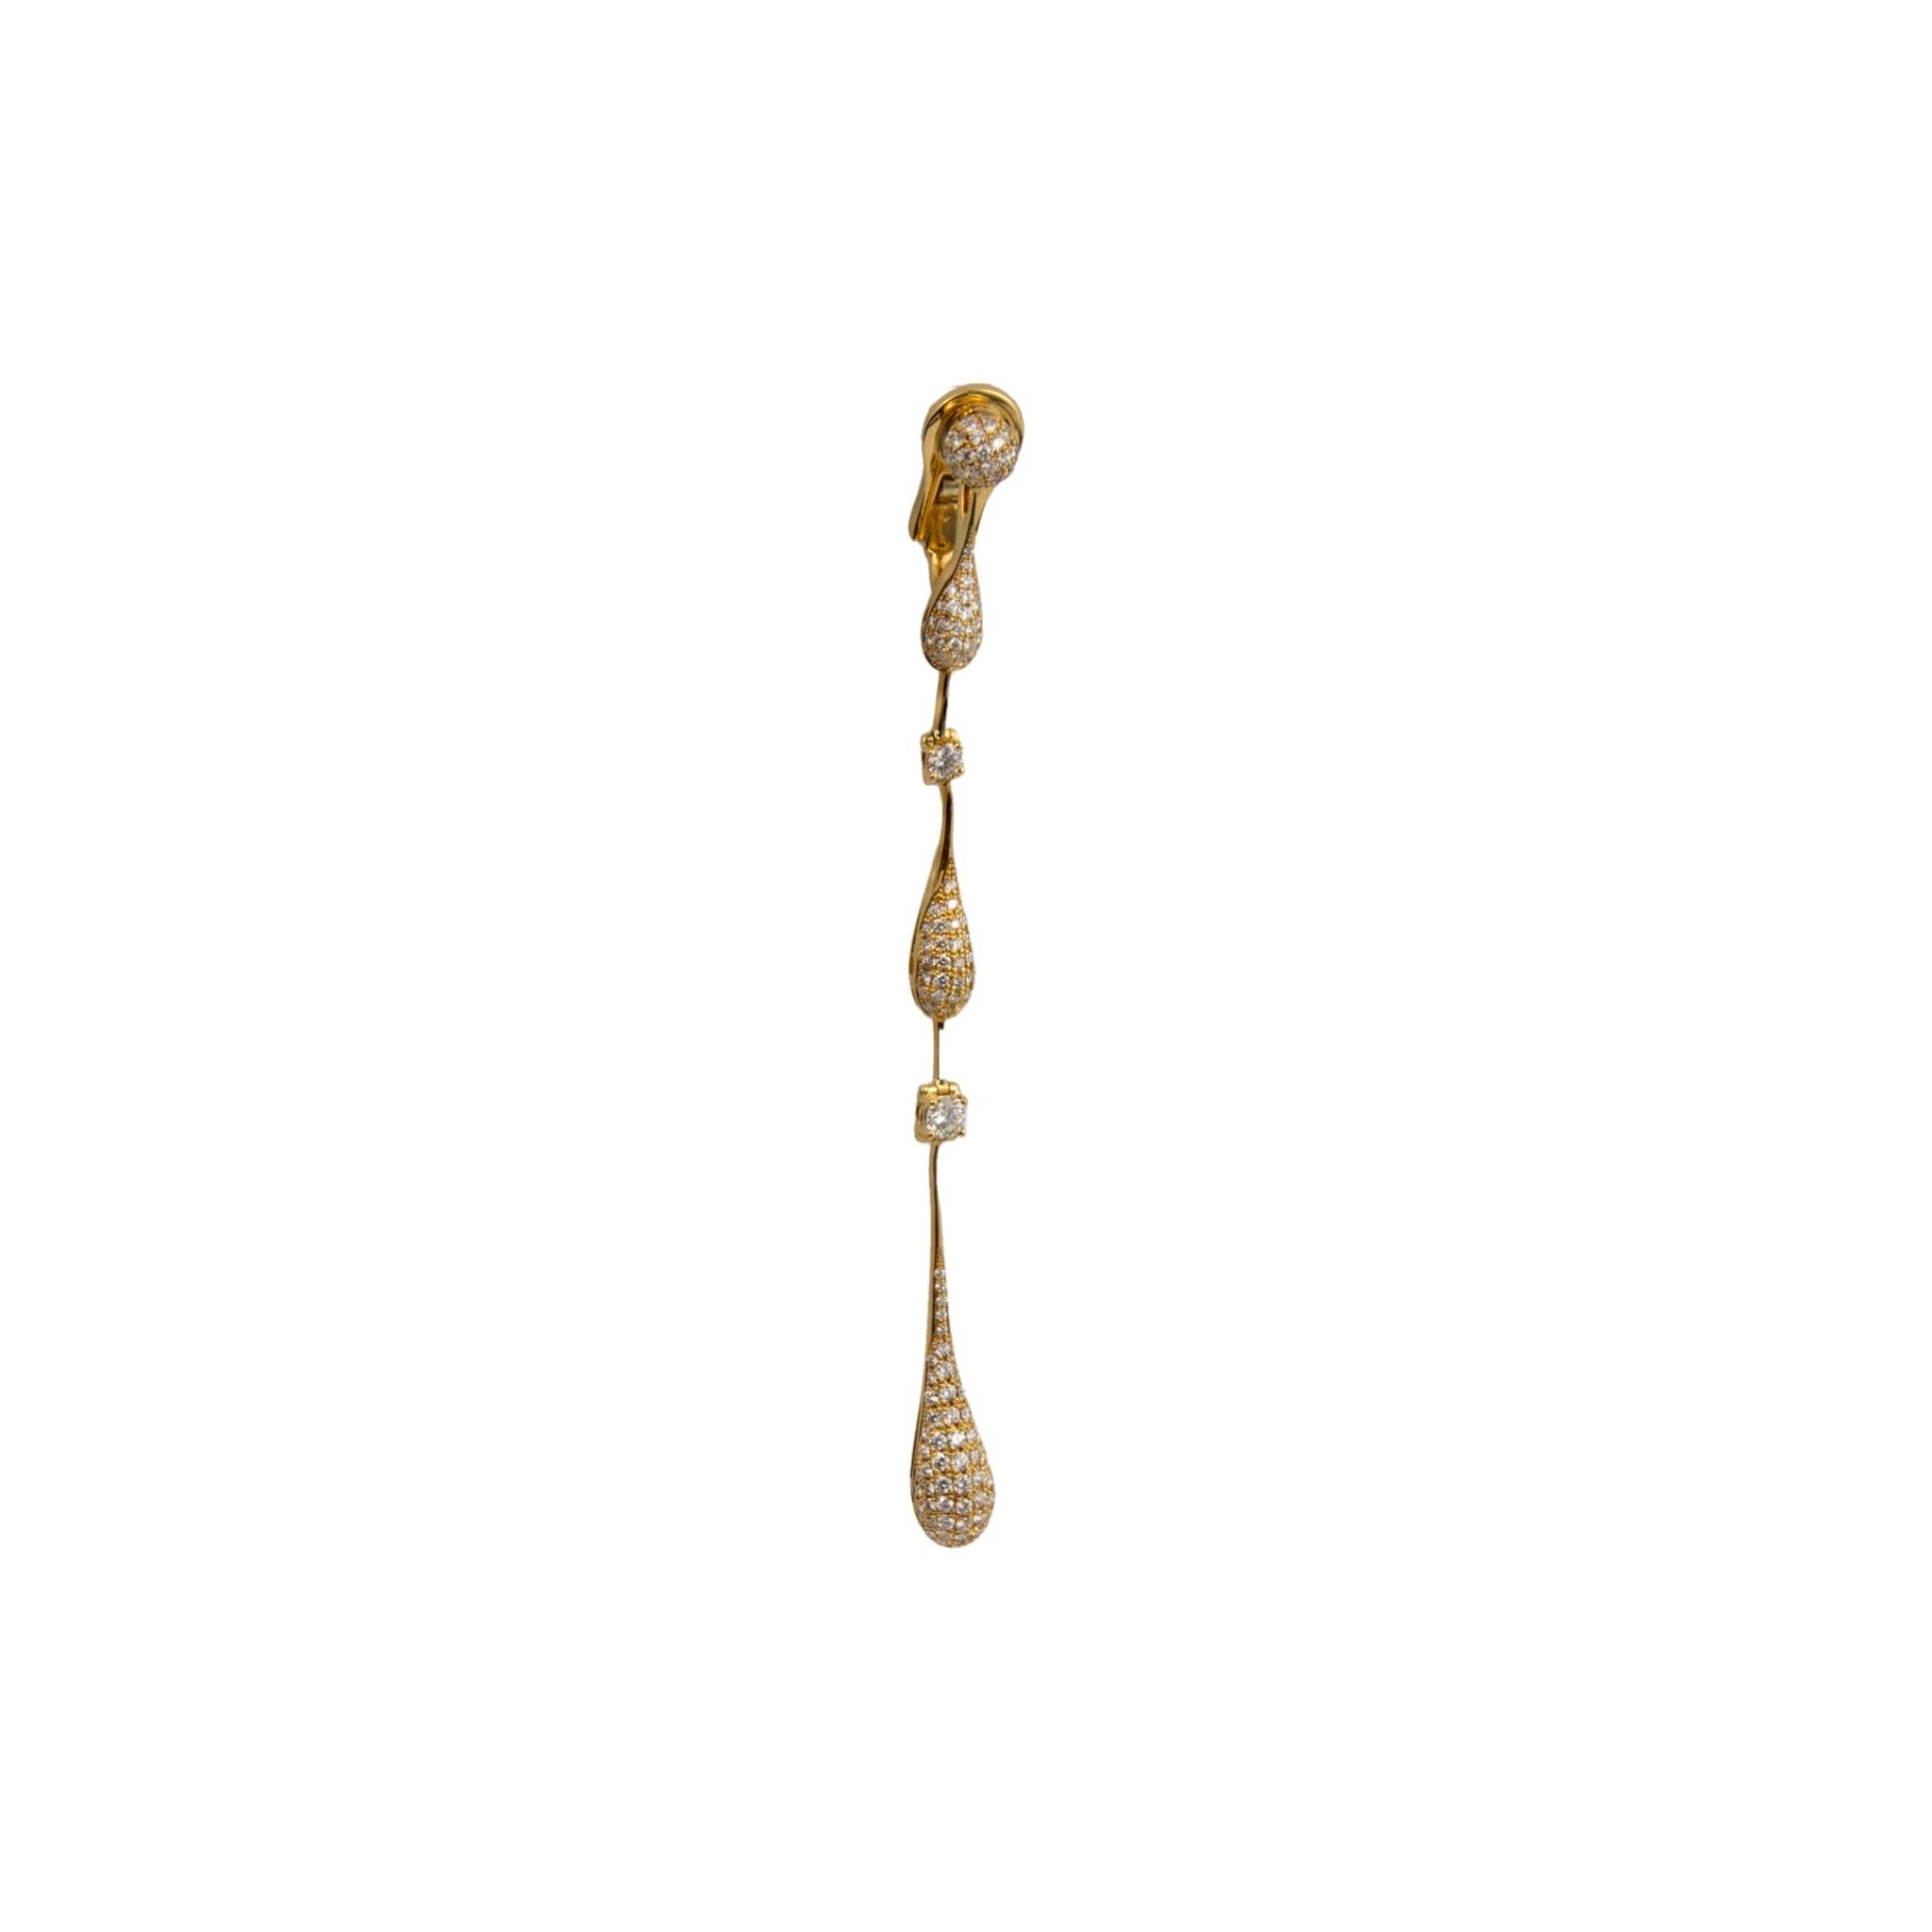 Chopard 18k Yellow Gold Earrings
302 Diamonds: 2.52ctw
Original box and original papers
SKU: CHP01216
Retail price: $34,470.00